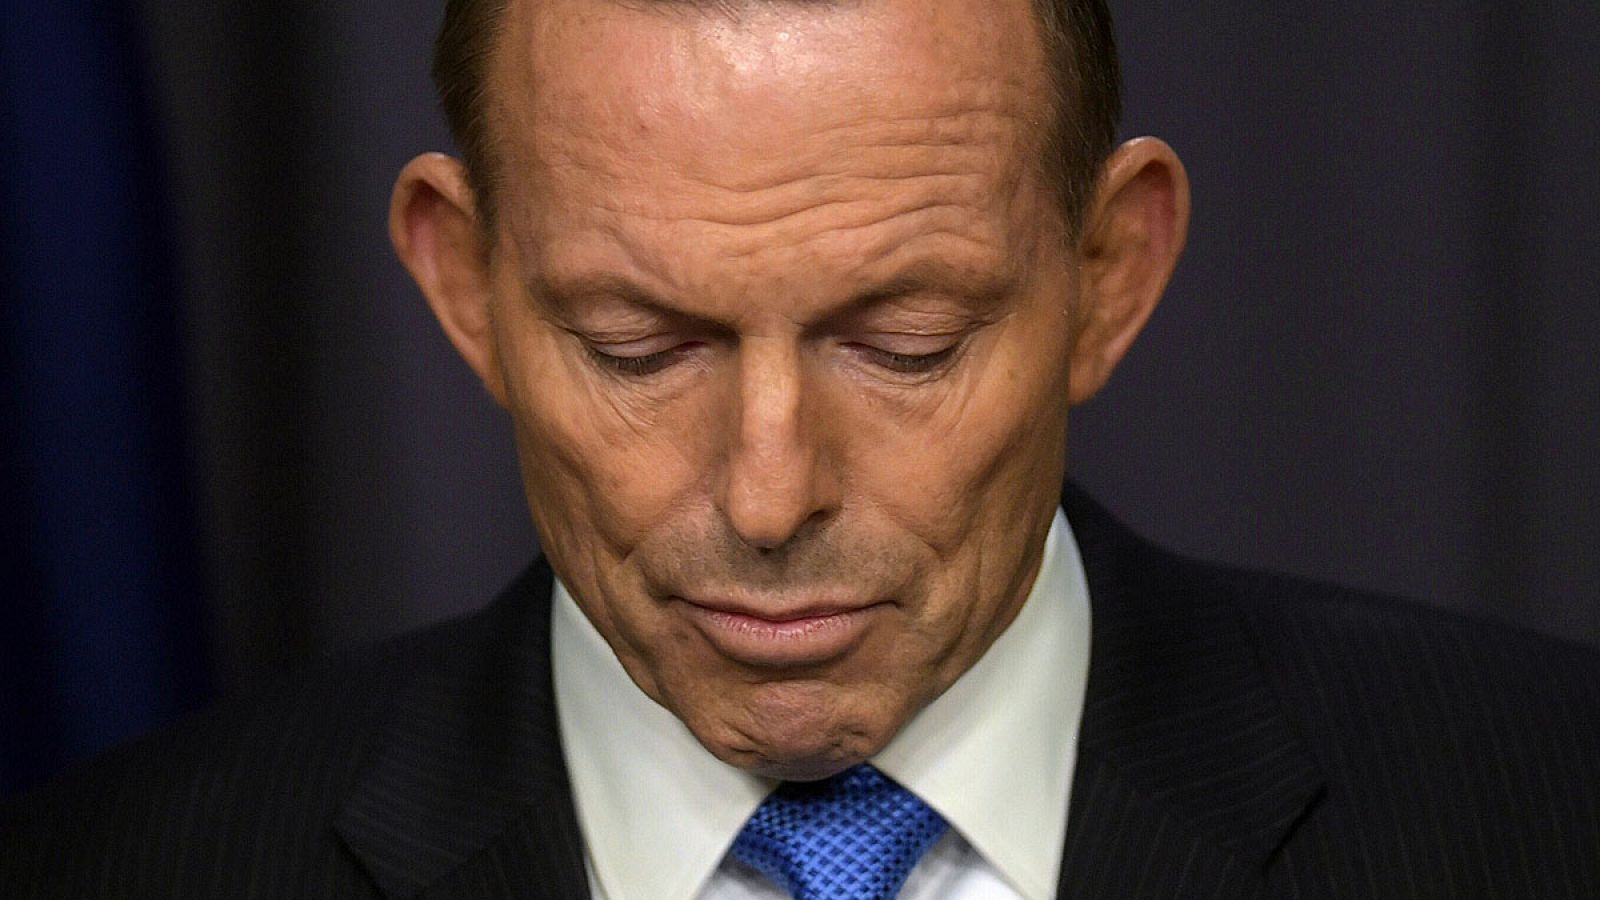 El primer ministro australiano, Tony Abbott, durante una rueda de prensa en Canberra, Australia